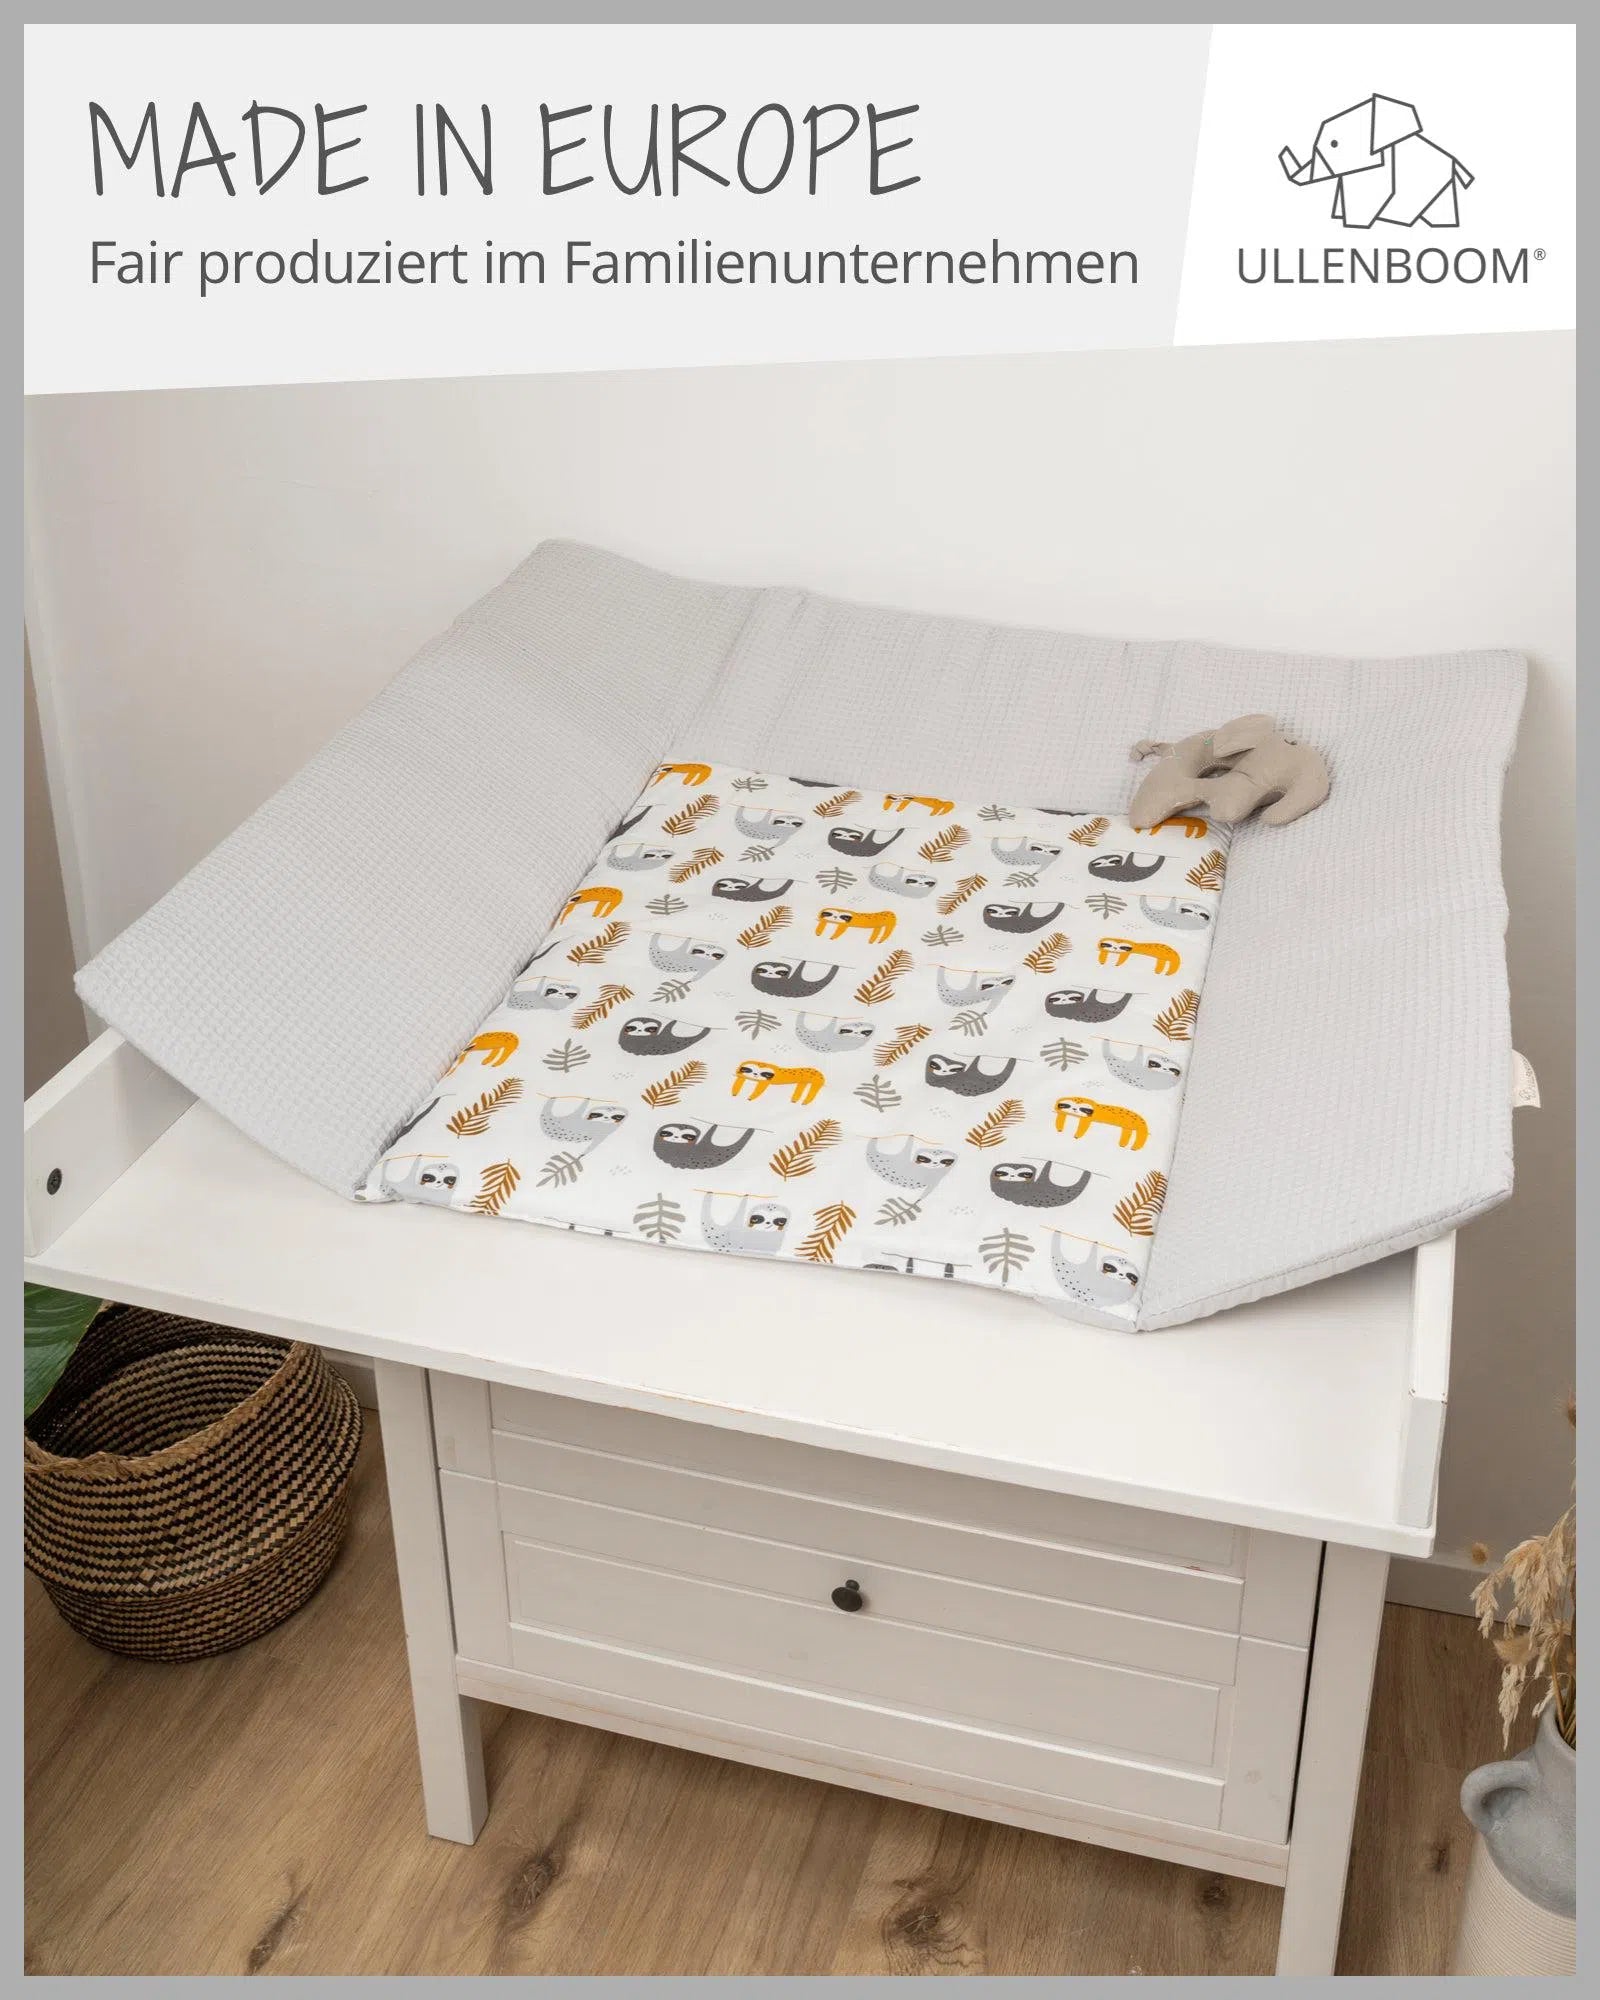 Wickelauflage Waffelpiqué Motiv GRAU FAULTIERE-ULLENBOOM-75 x 85 cm-ULLENBOOM Baby